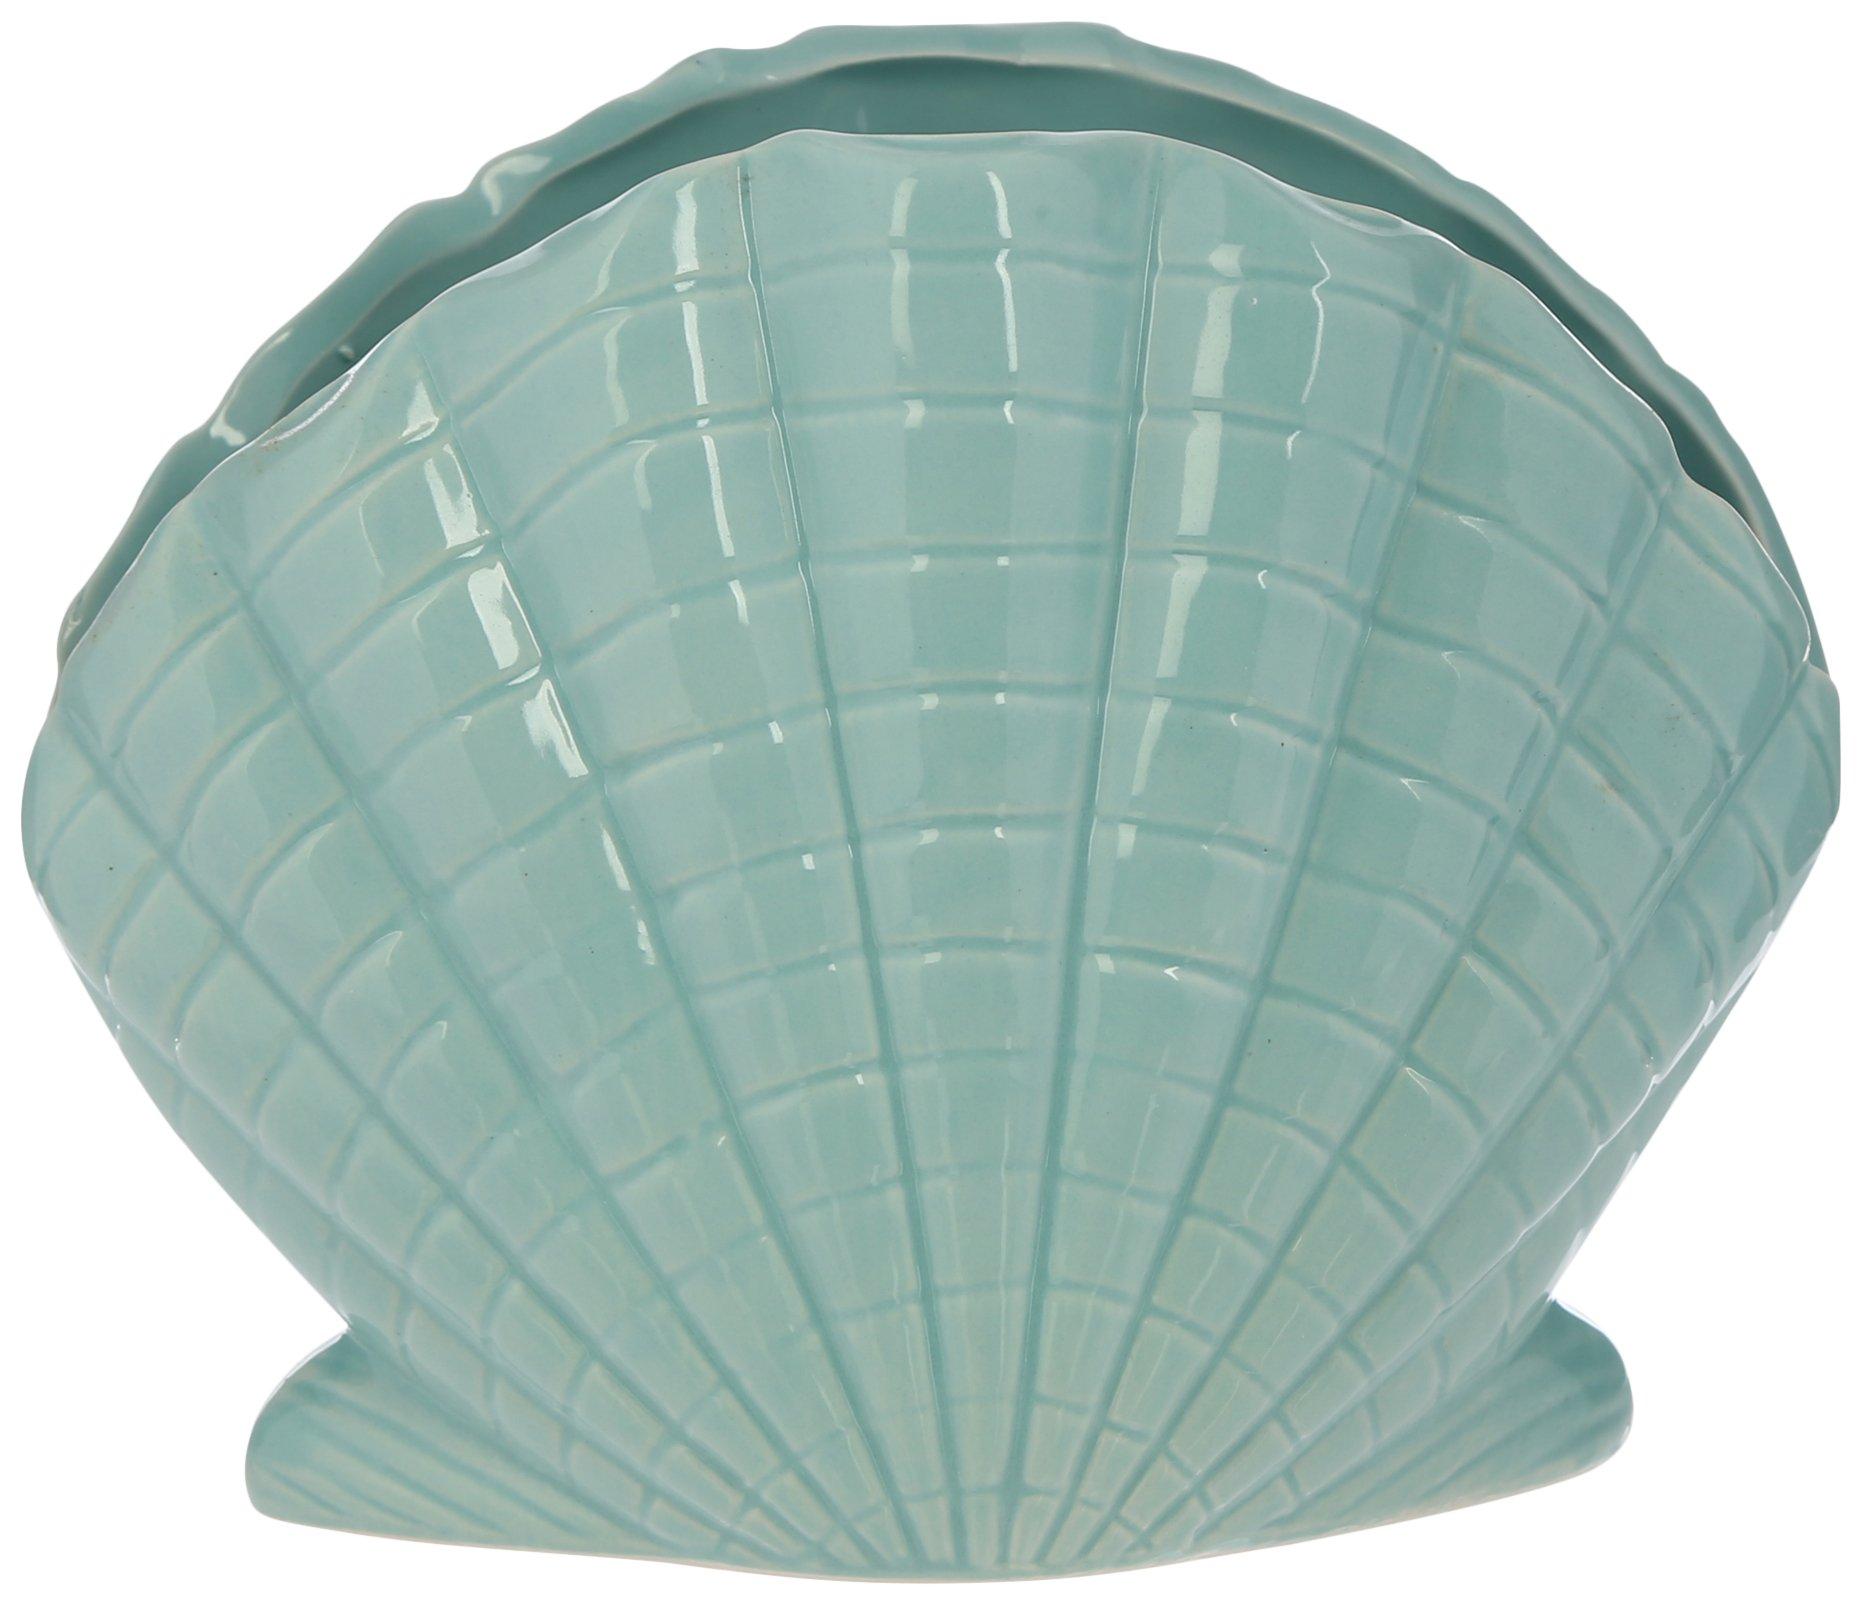 6.5 in Ceramic Seashell Home Accent